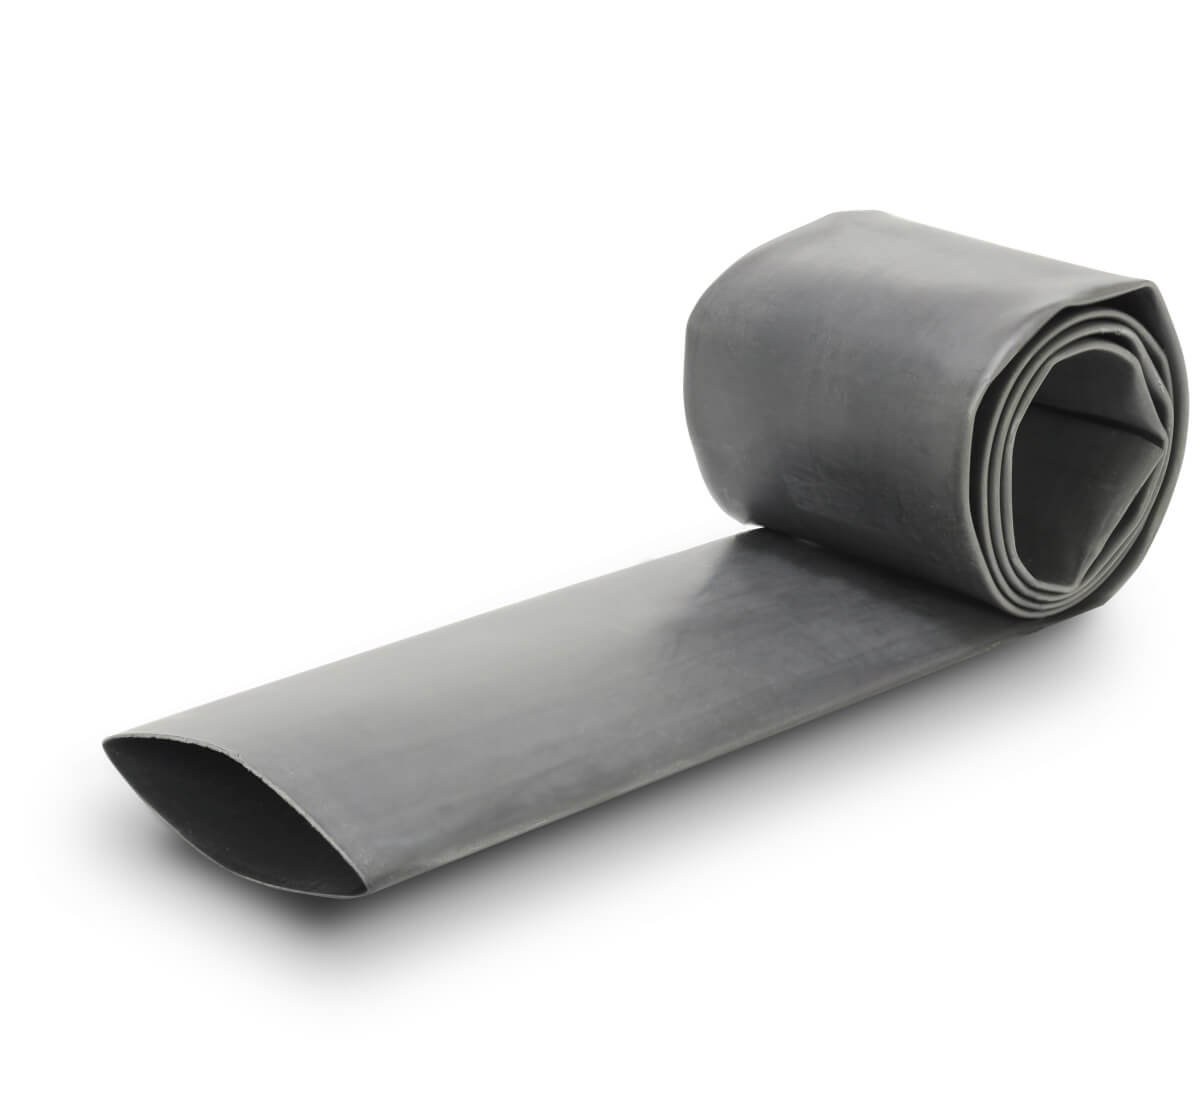 Heat-shrink tubing 2:1 Ø3.2mm Grey (1m)